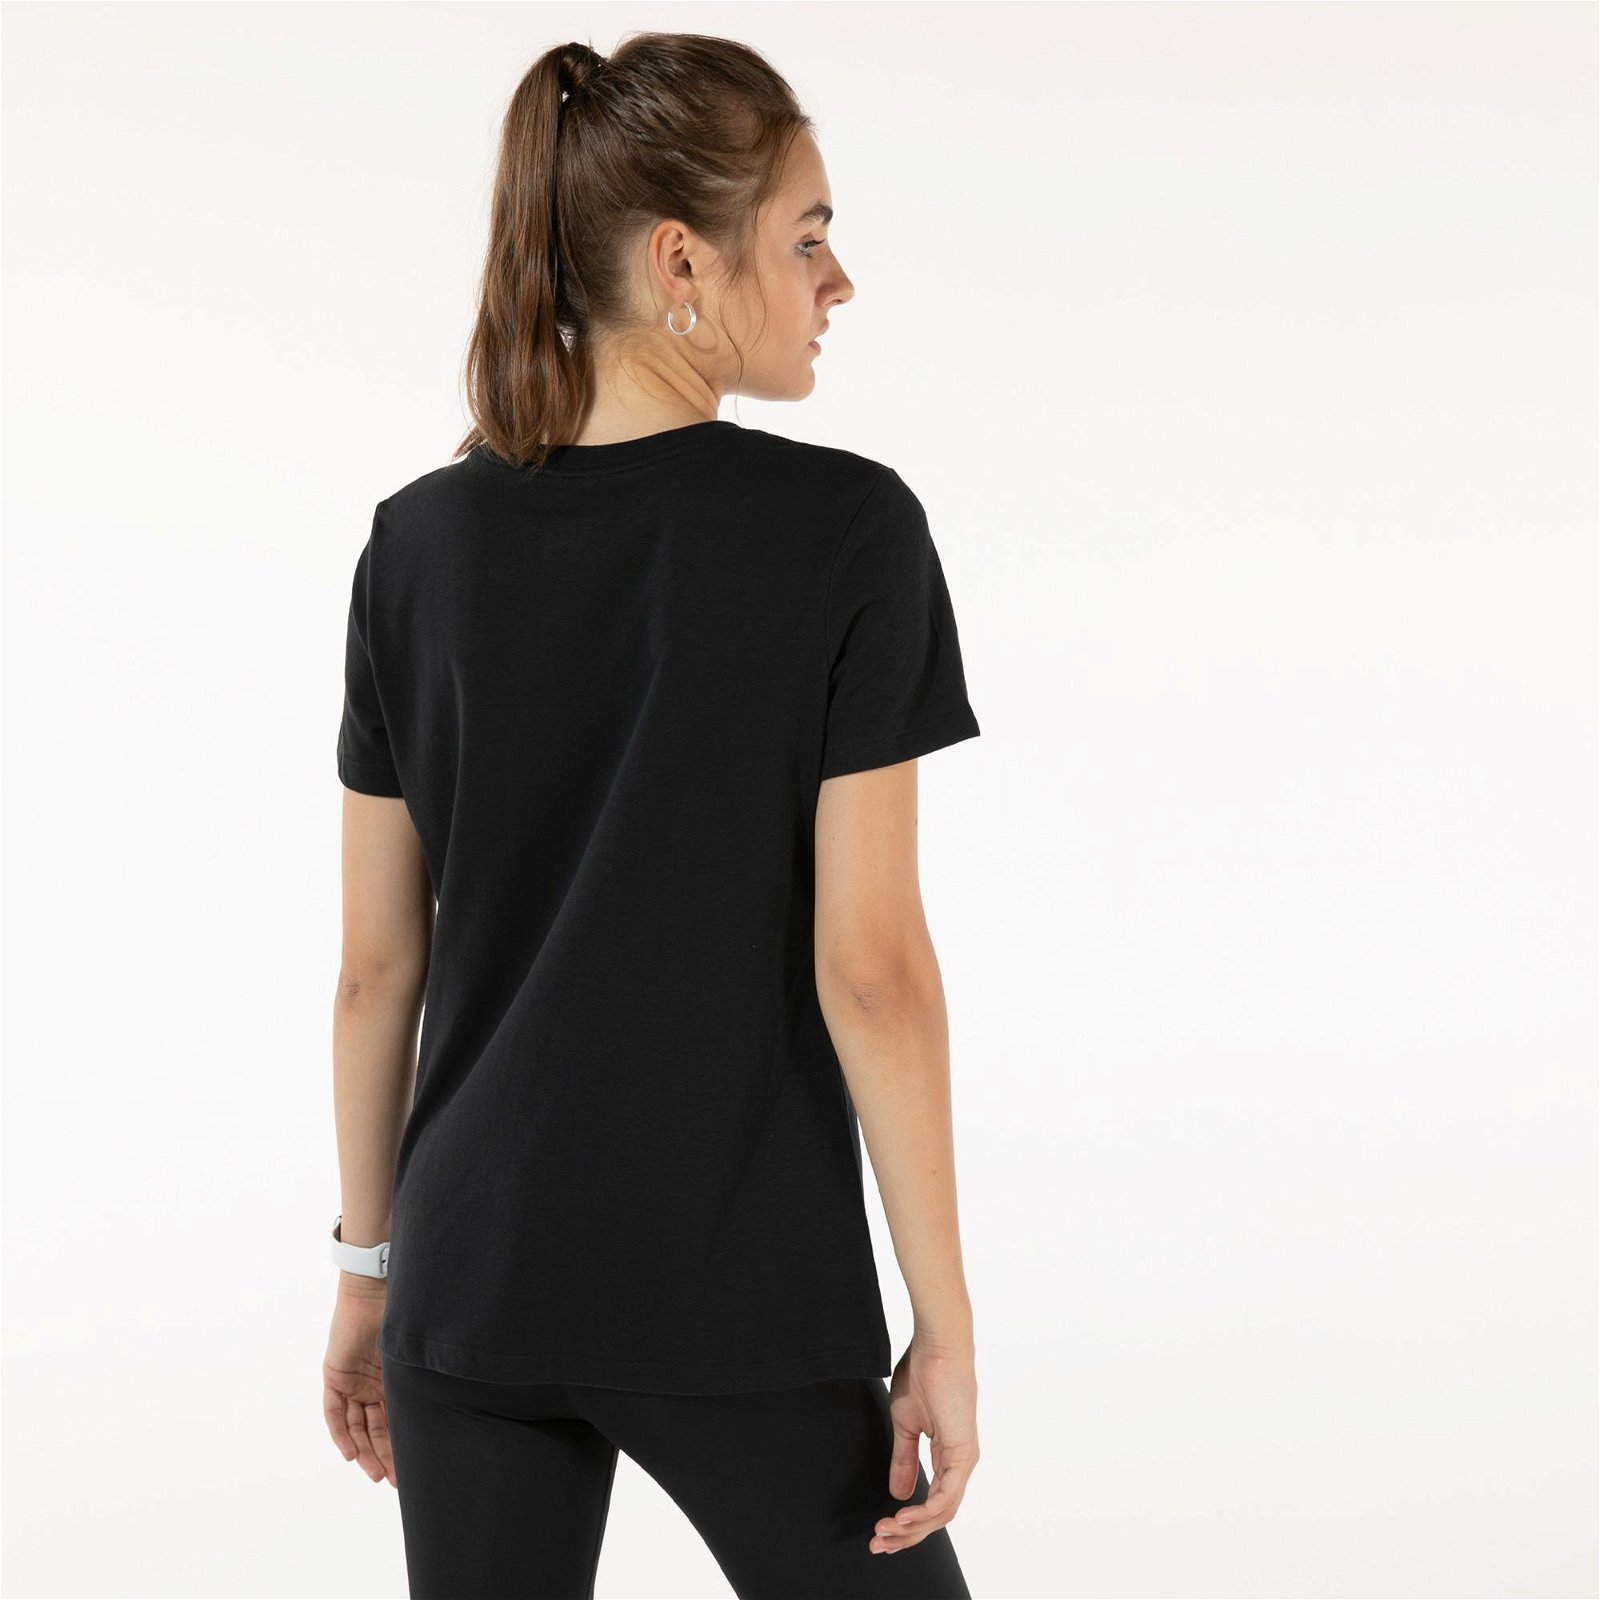 Nike Dry Dfc Crew Kadın Siyah T-Shirt